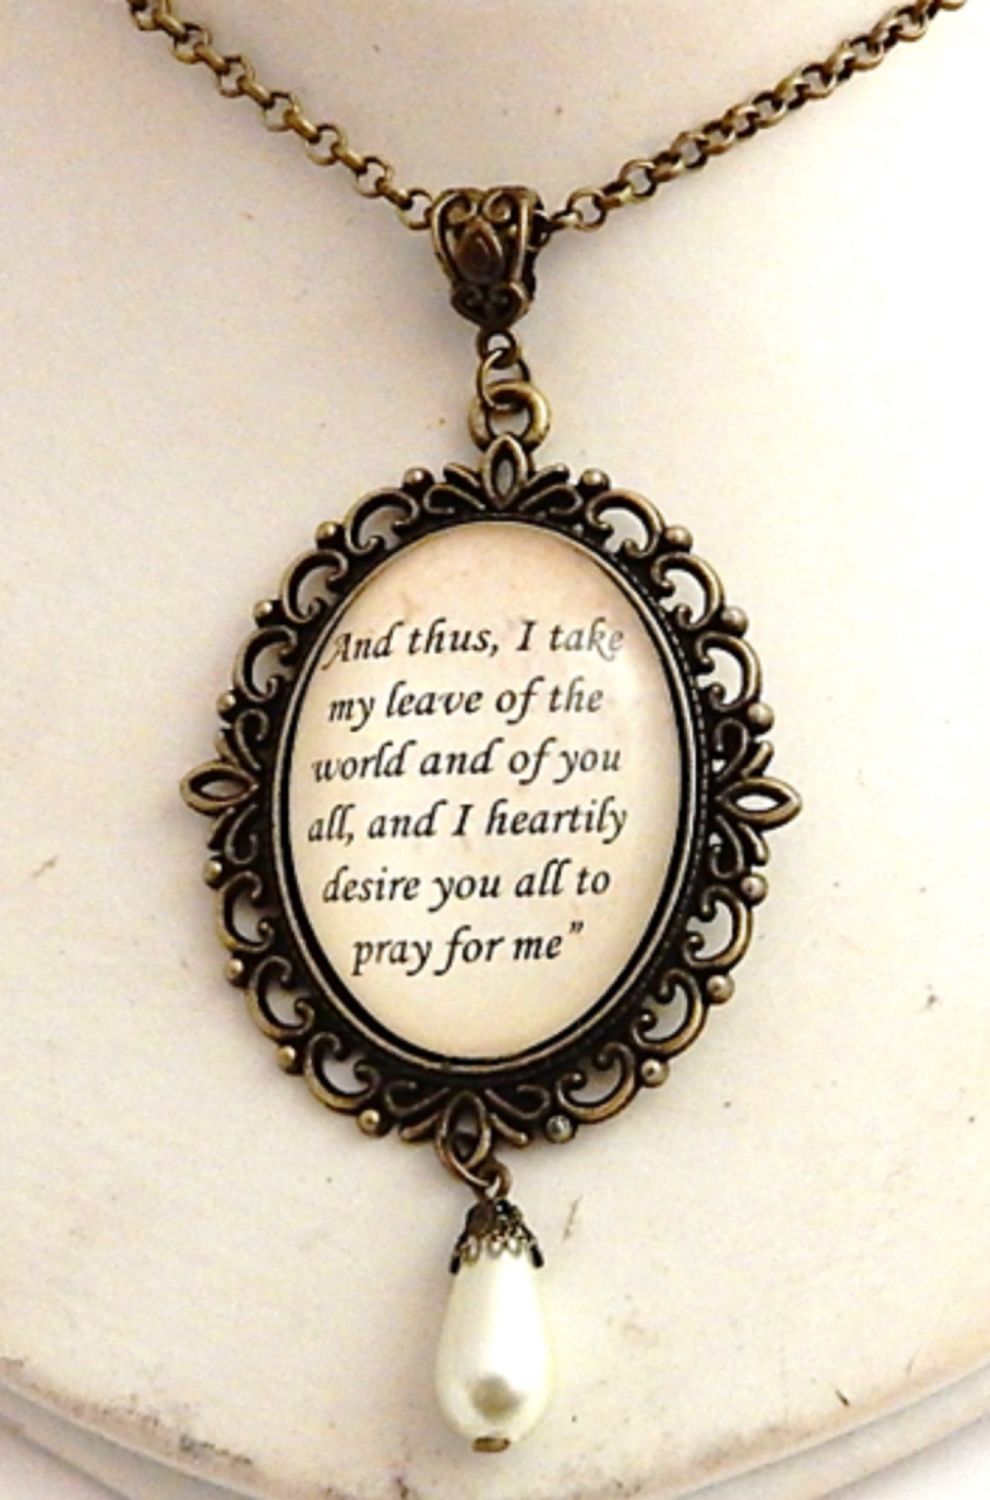 Queen Anne Boleyn last words quote necklace